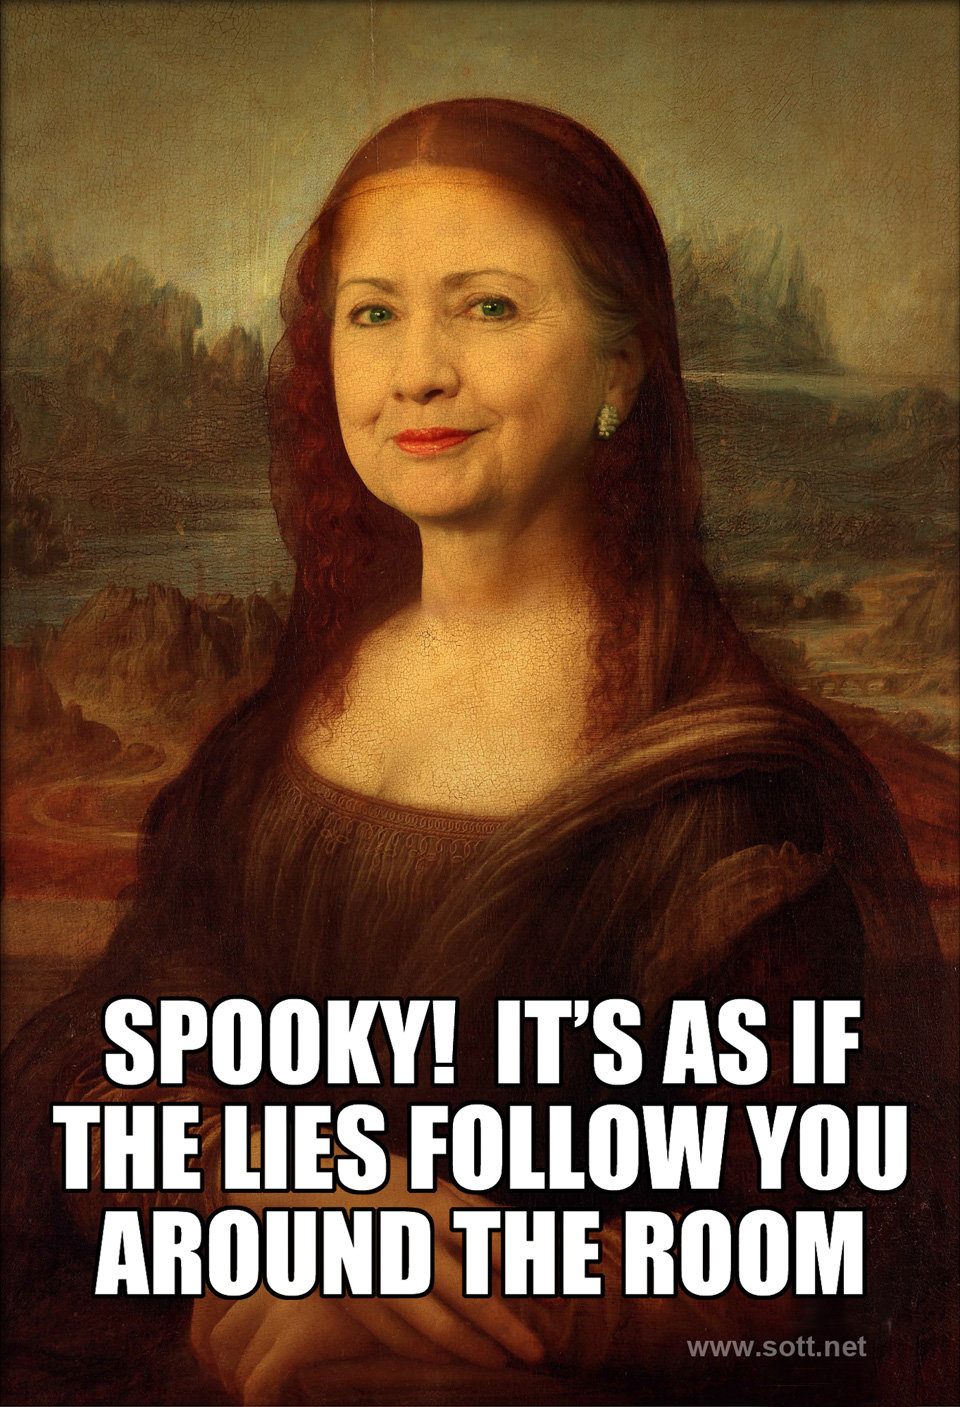 Hilary Clinton psychopath